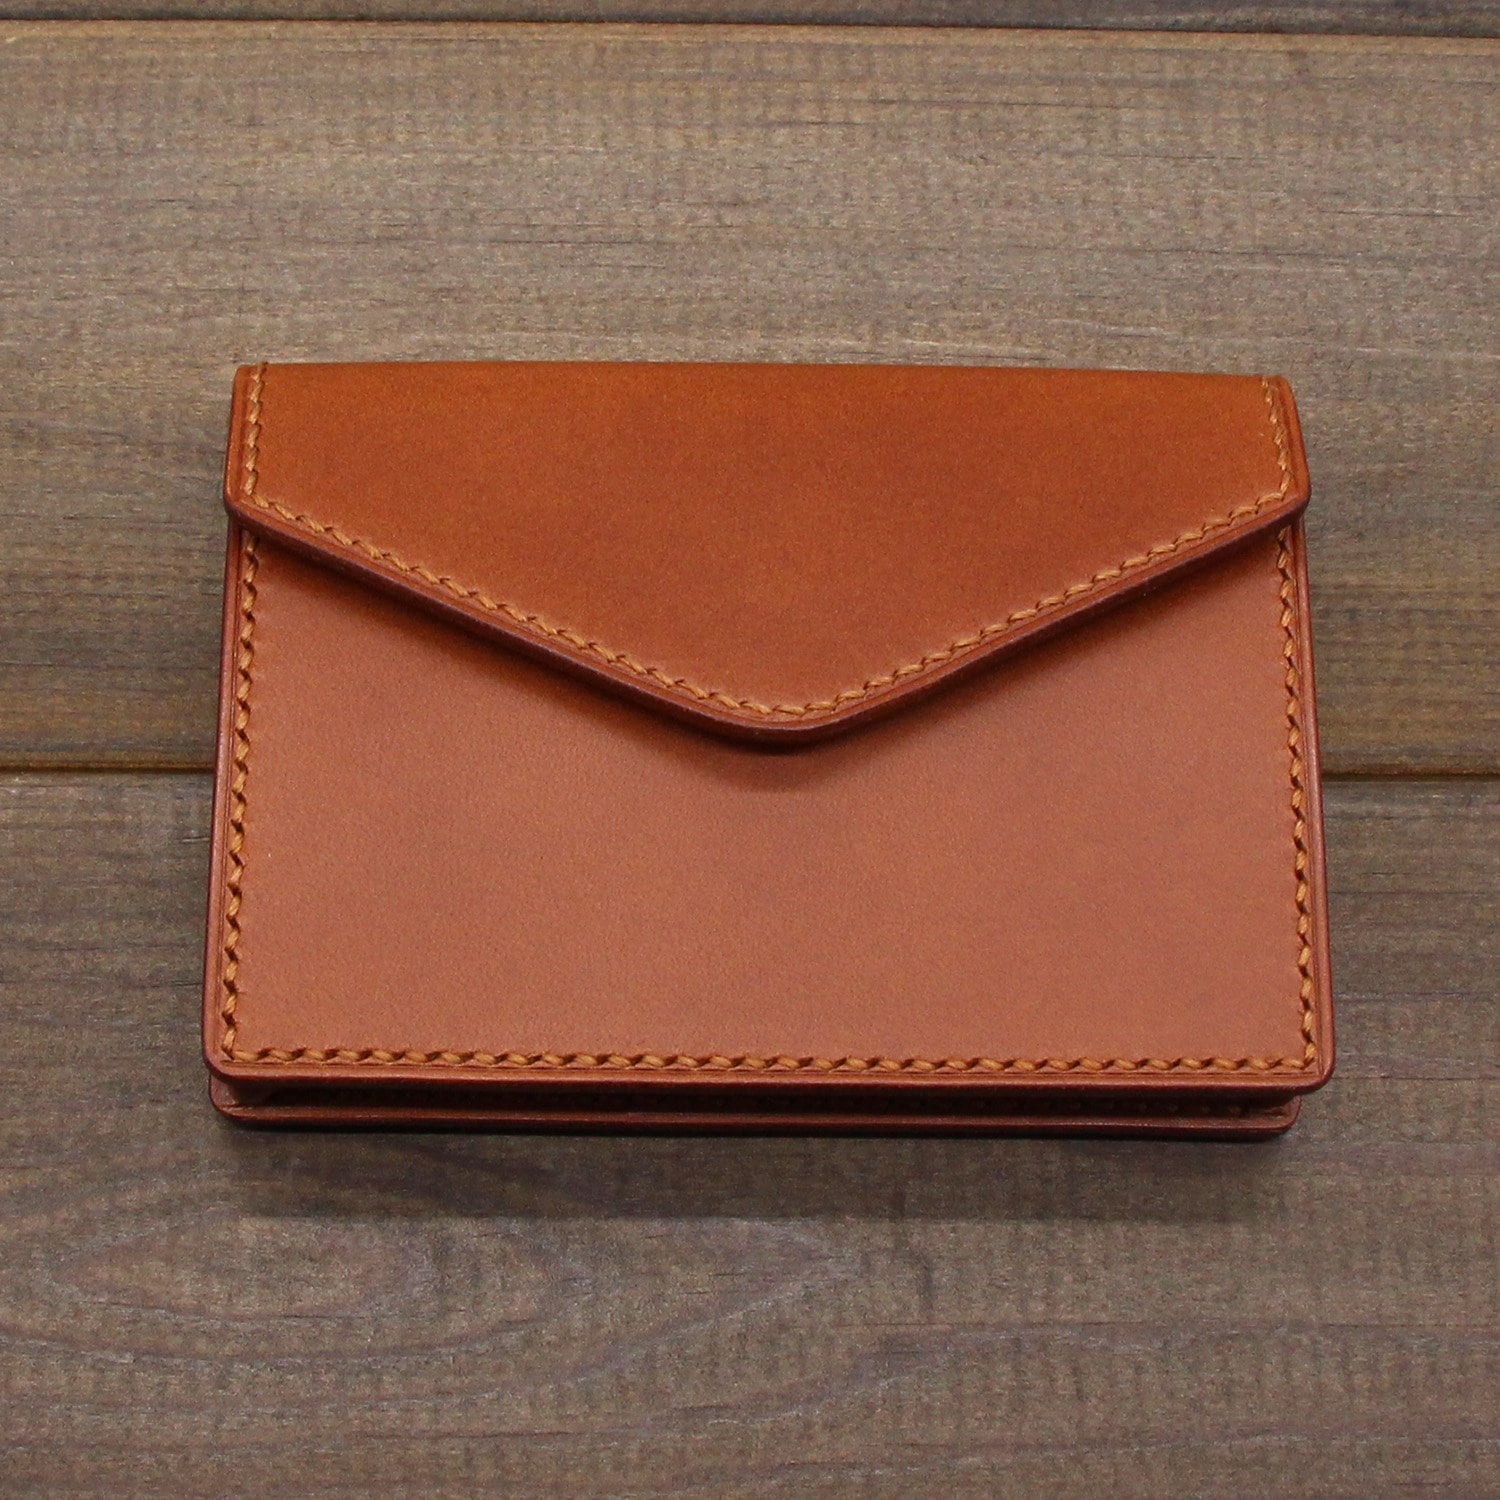 Leather Card Wallet Snap Wallet Minimalist Pocket Wallet | Etsy